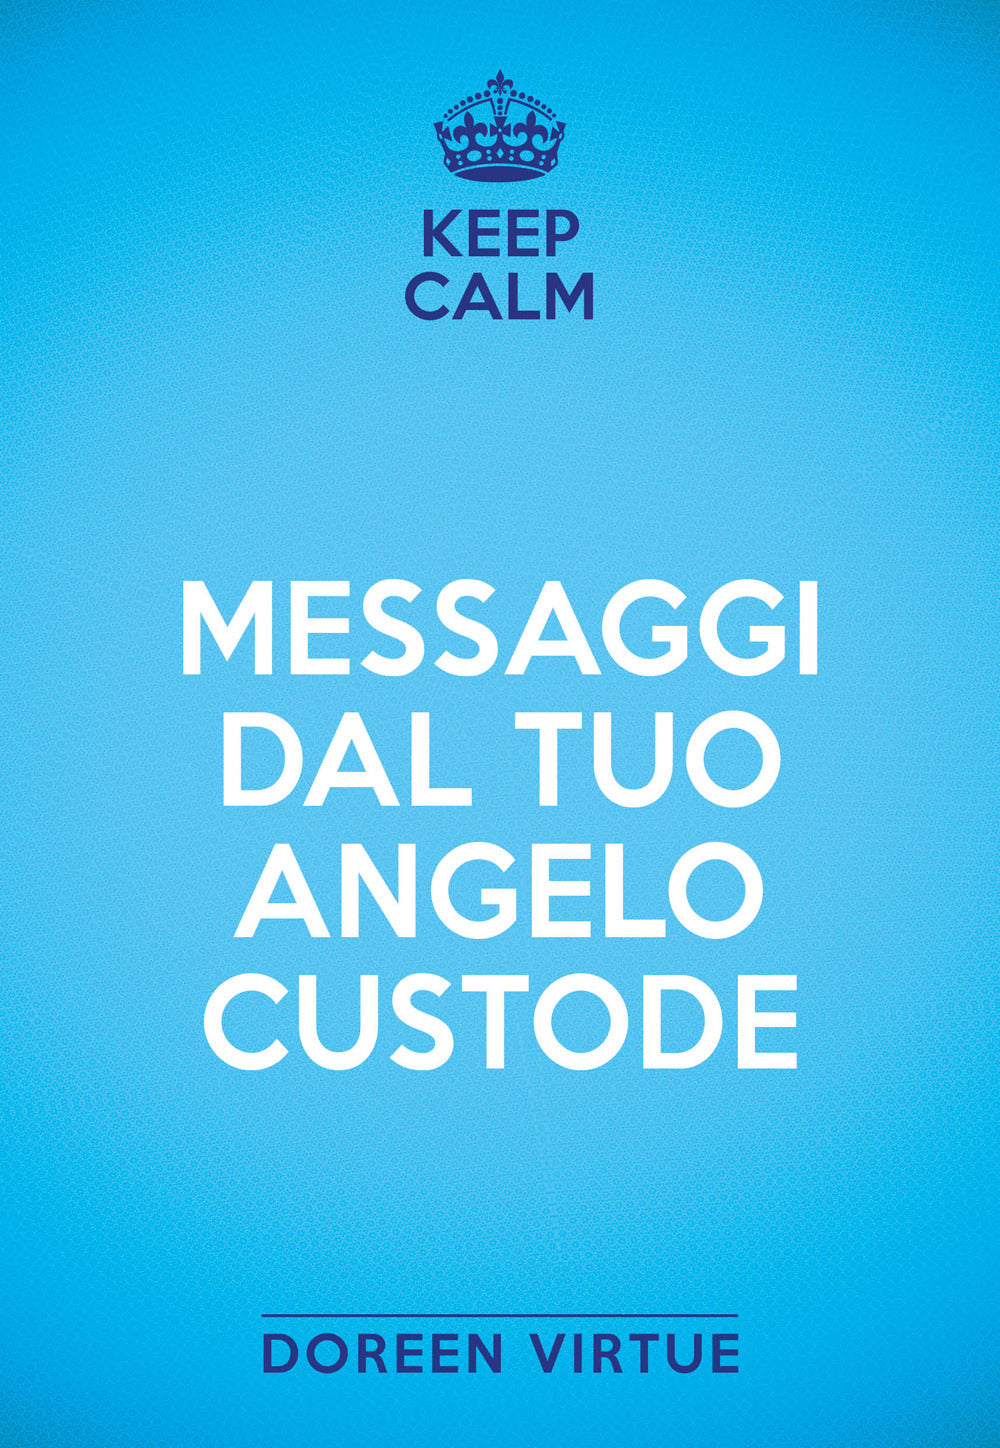 Keep calm. Messaggi dal tuo angelo custode.